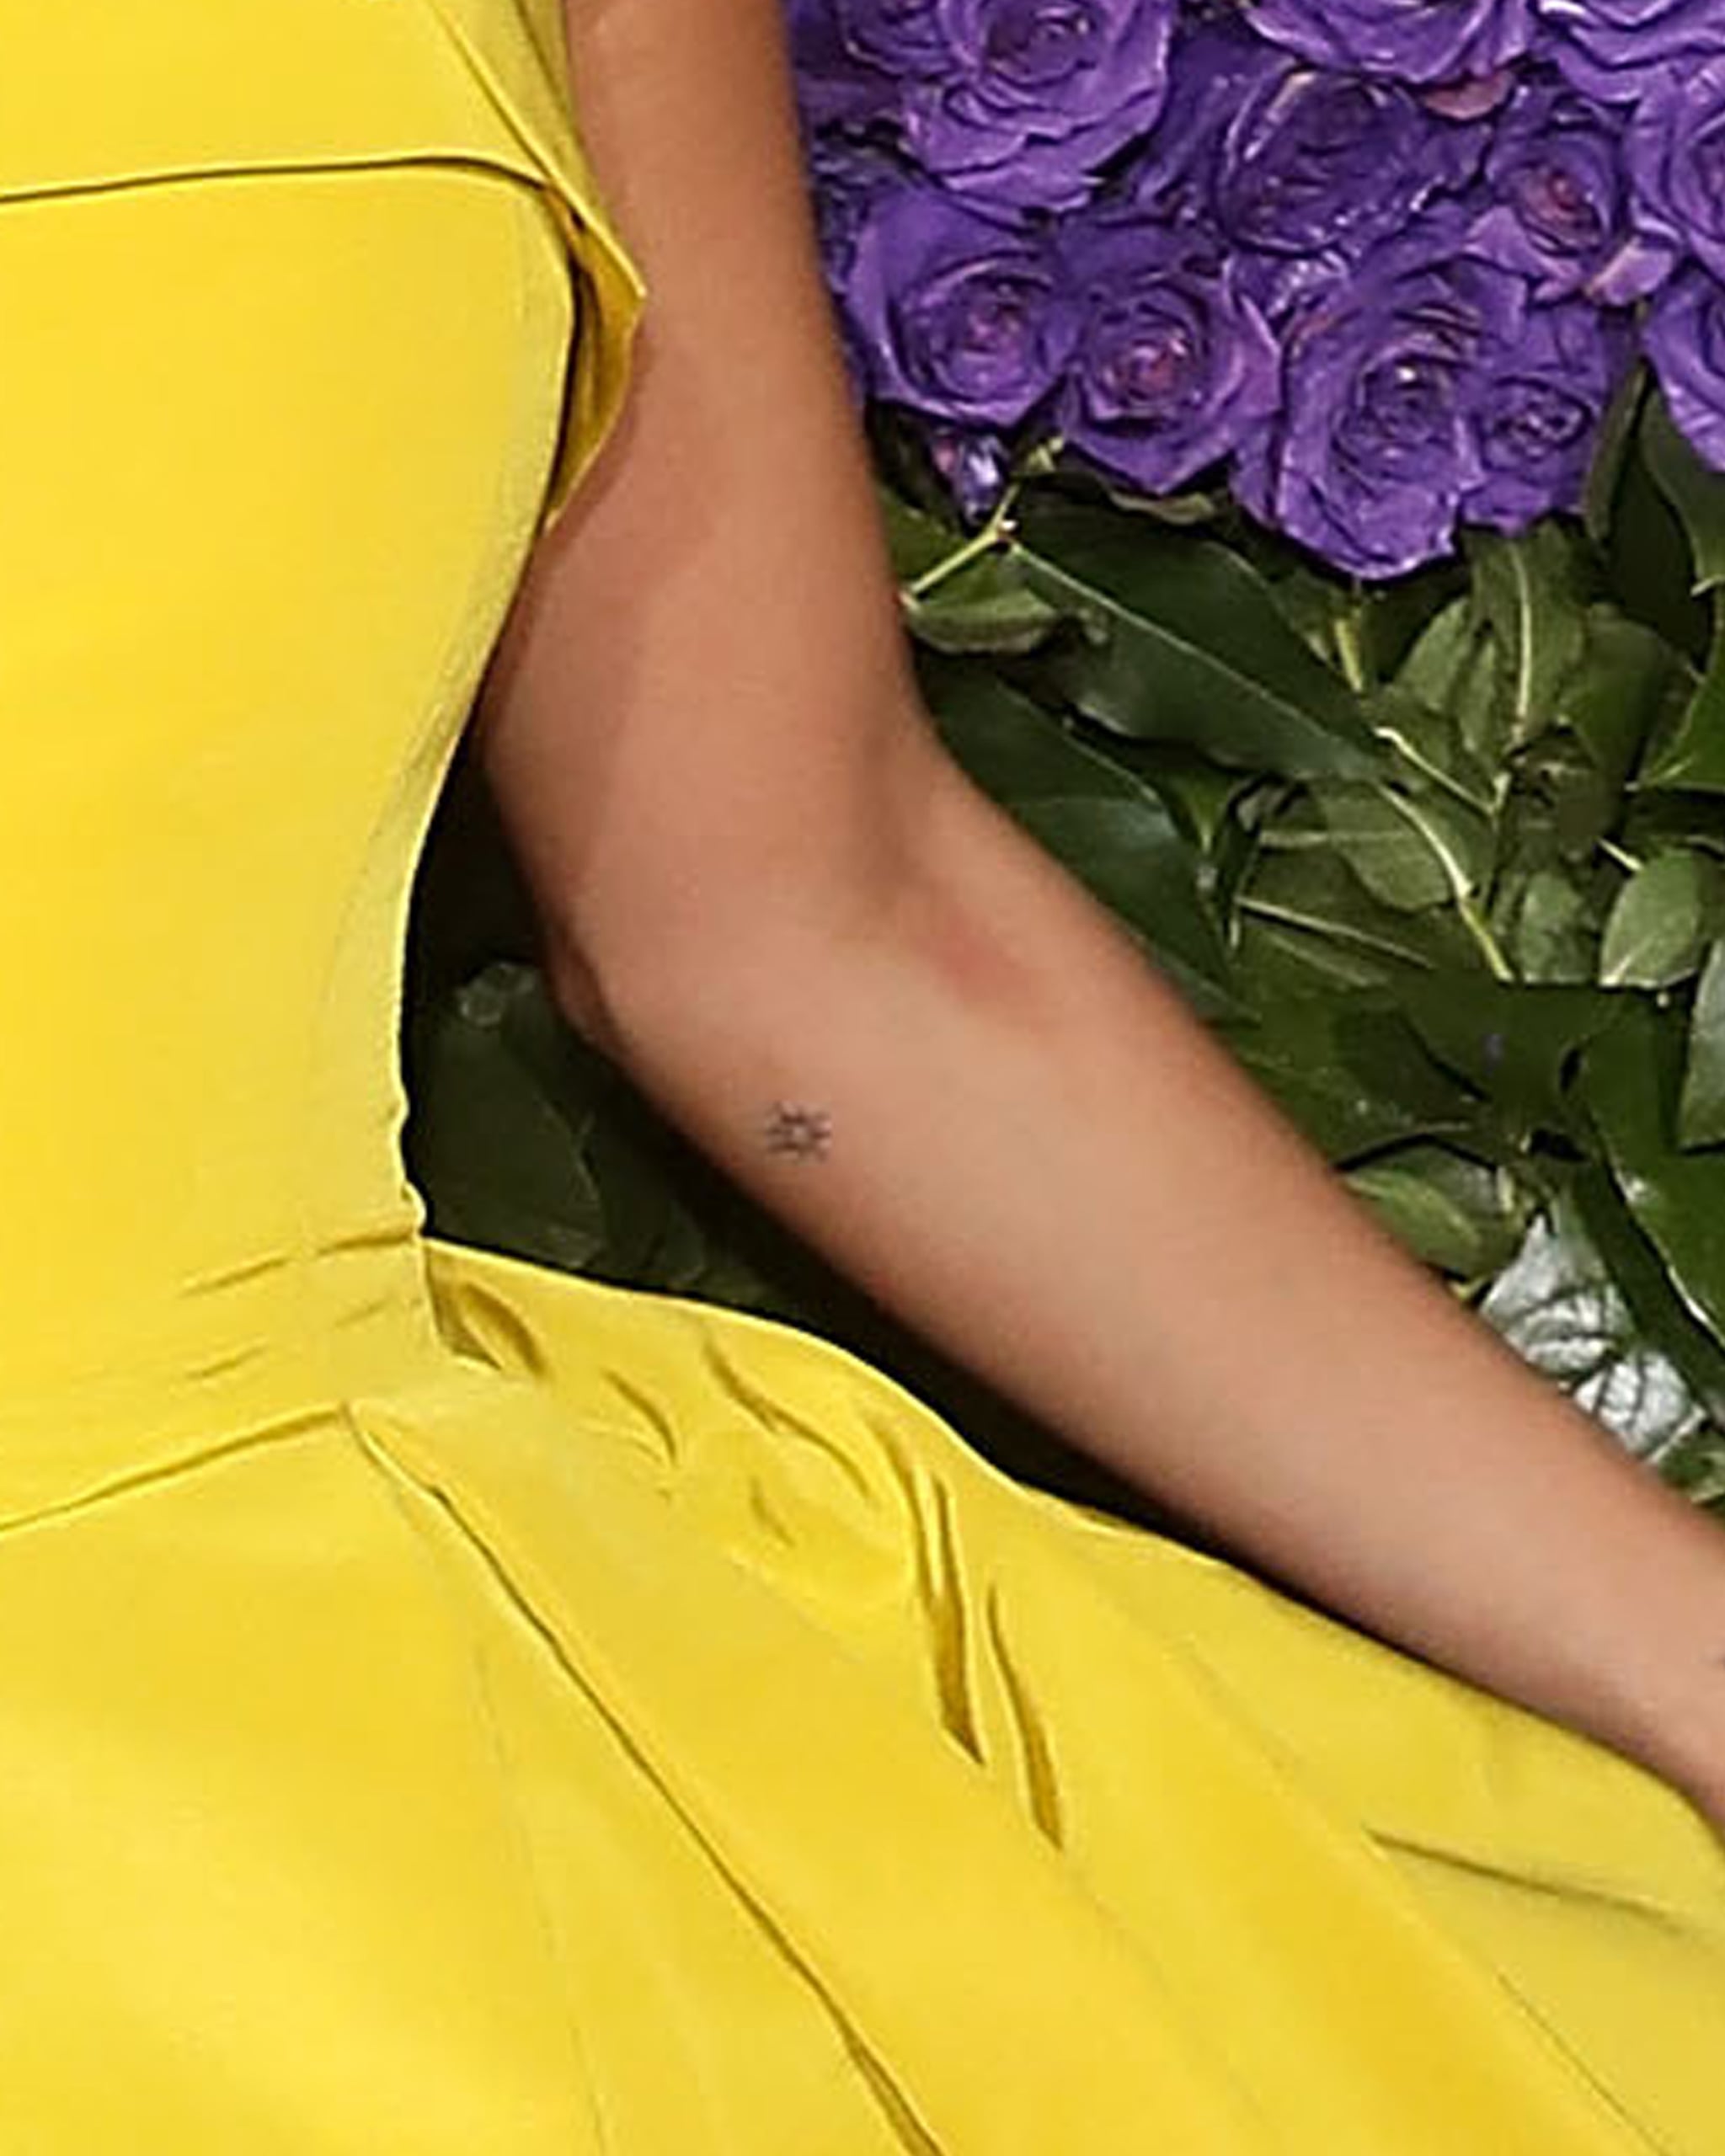 Ashley Park's Star Tattoo | Ashley Park's Tiny Tattoos Are Speaking to Our  Minimalist-Design-Loving Hearts | POPSUGAR Beauty Photo 3